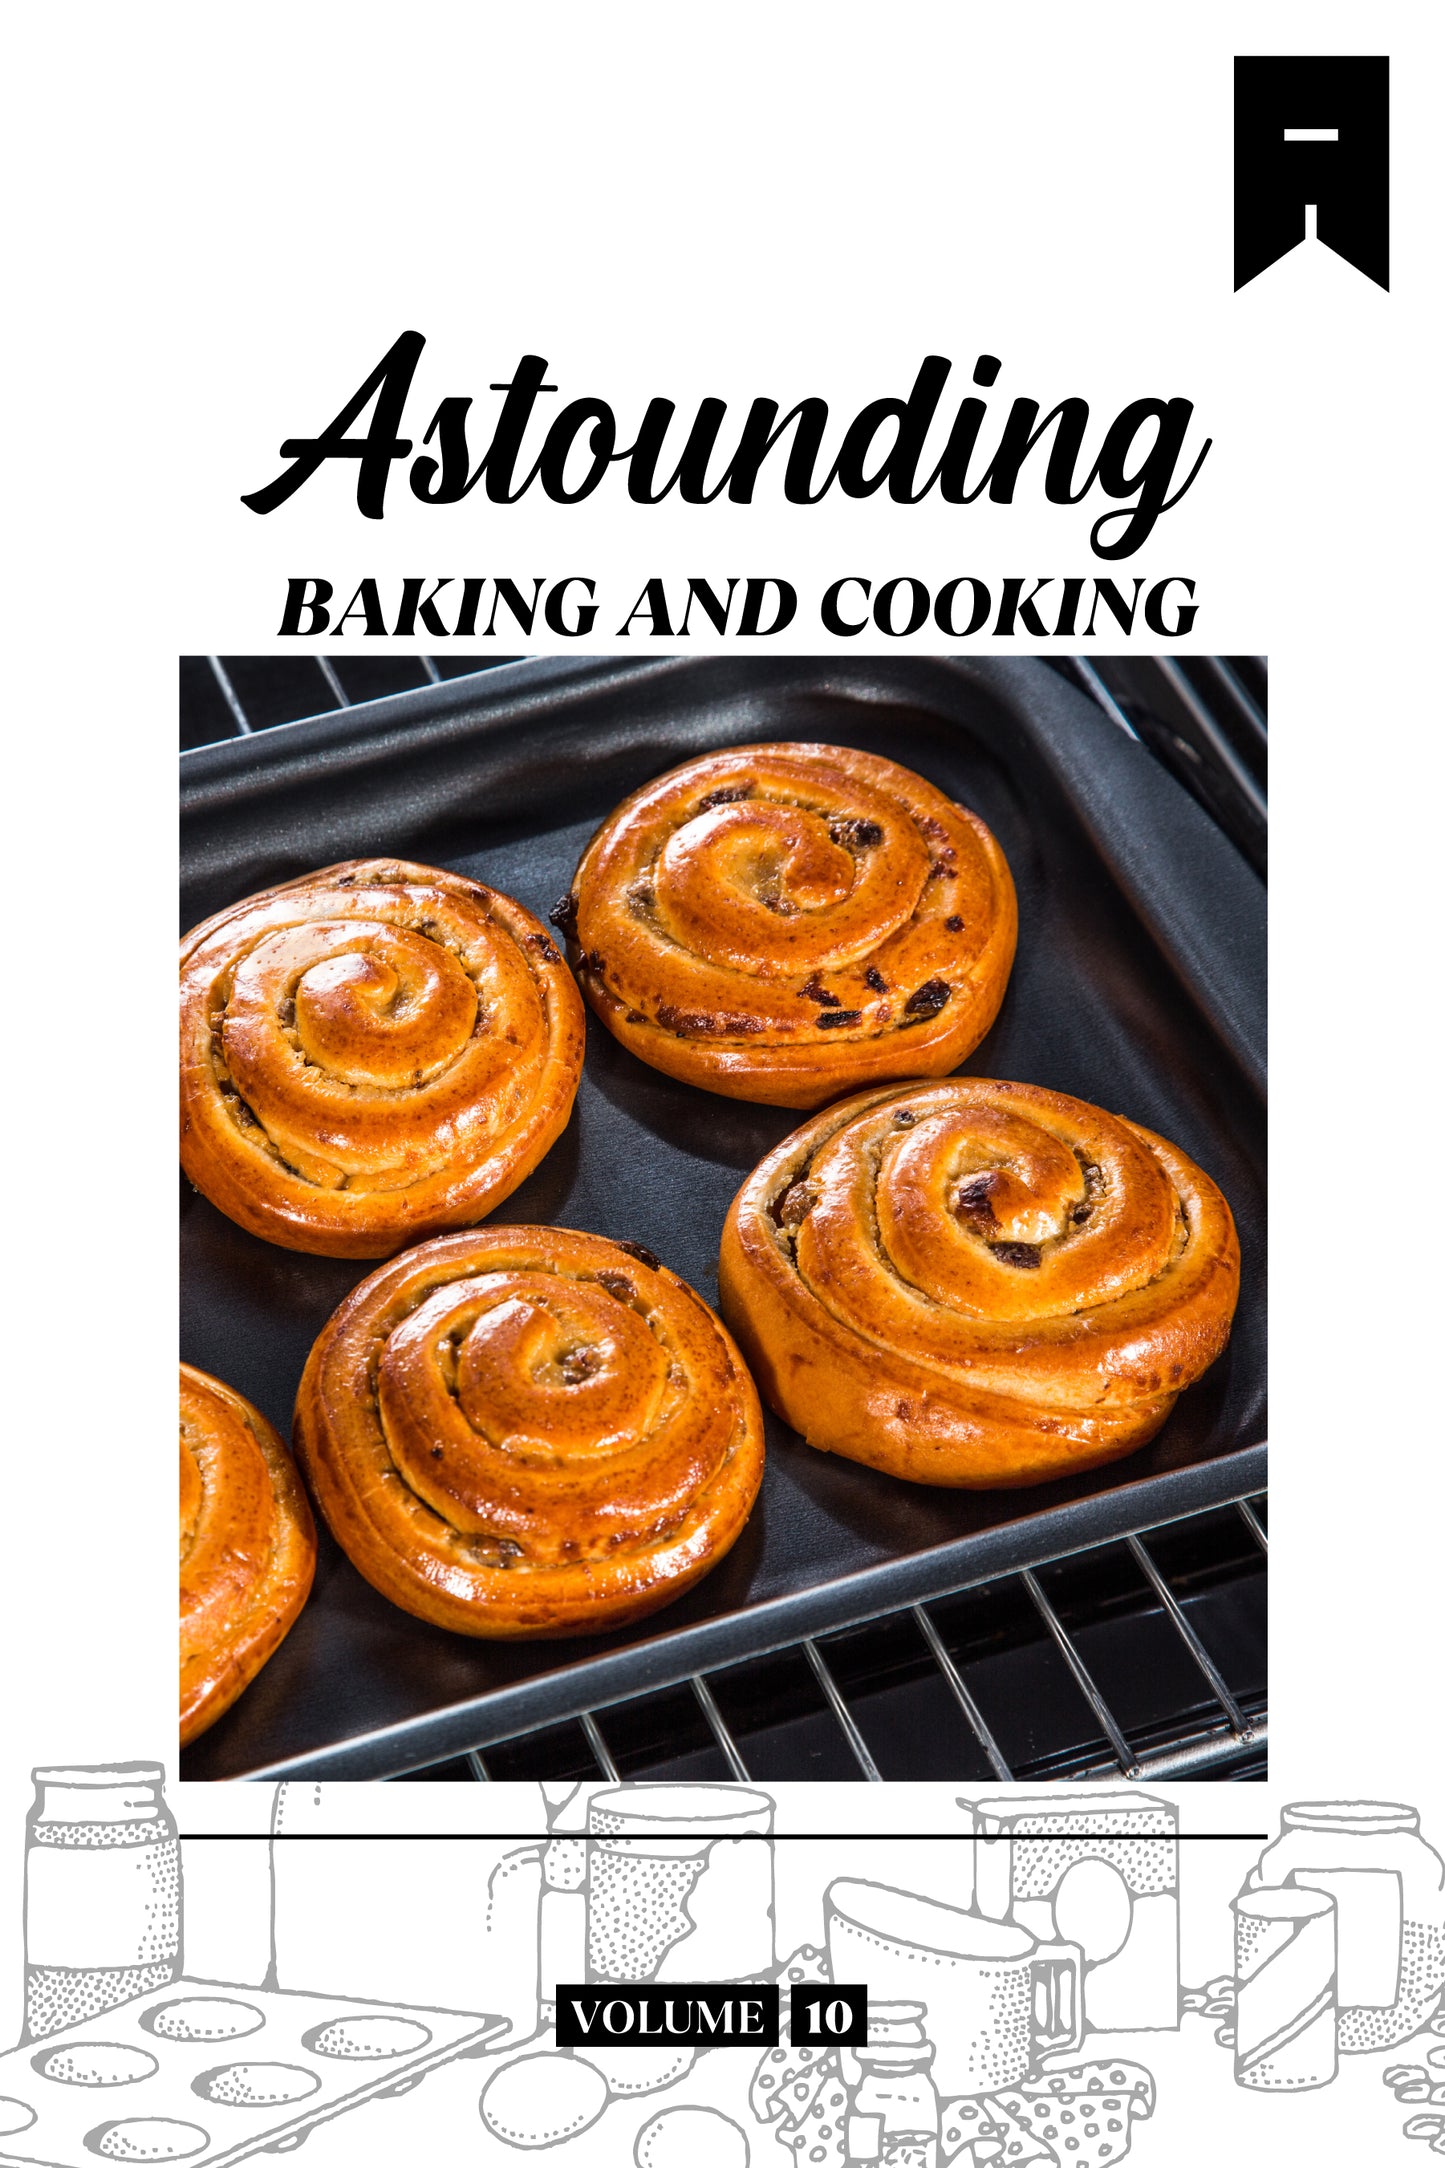 Astounding Baking (Volume 10) - Physical Book